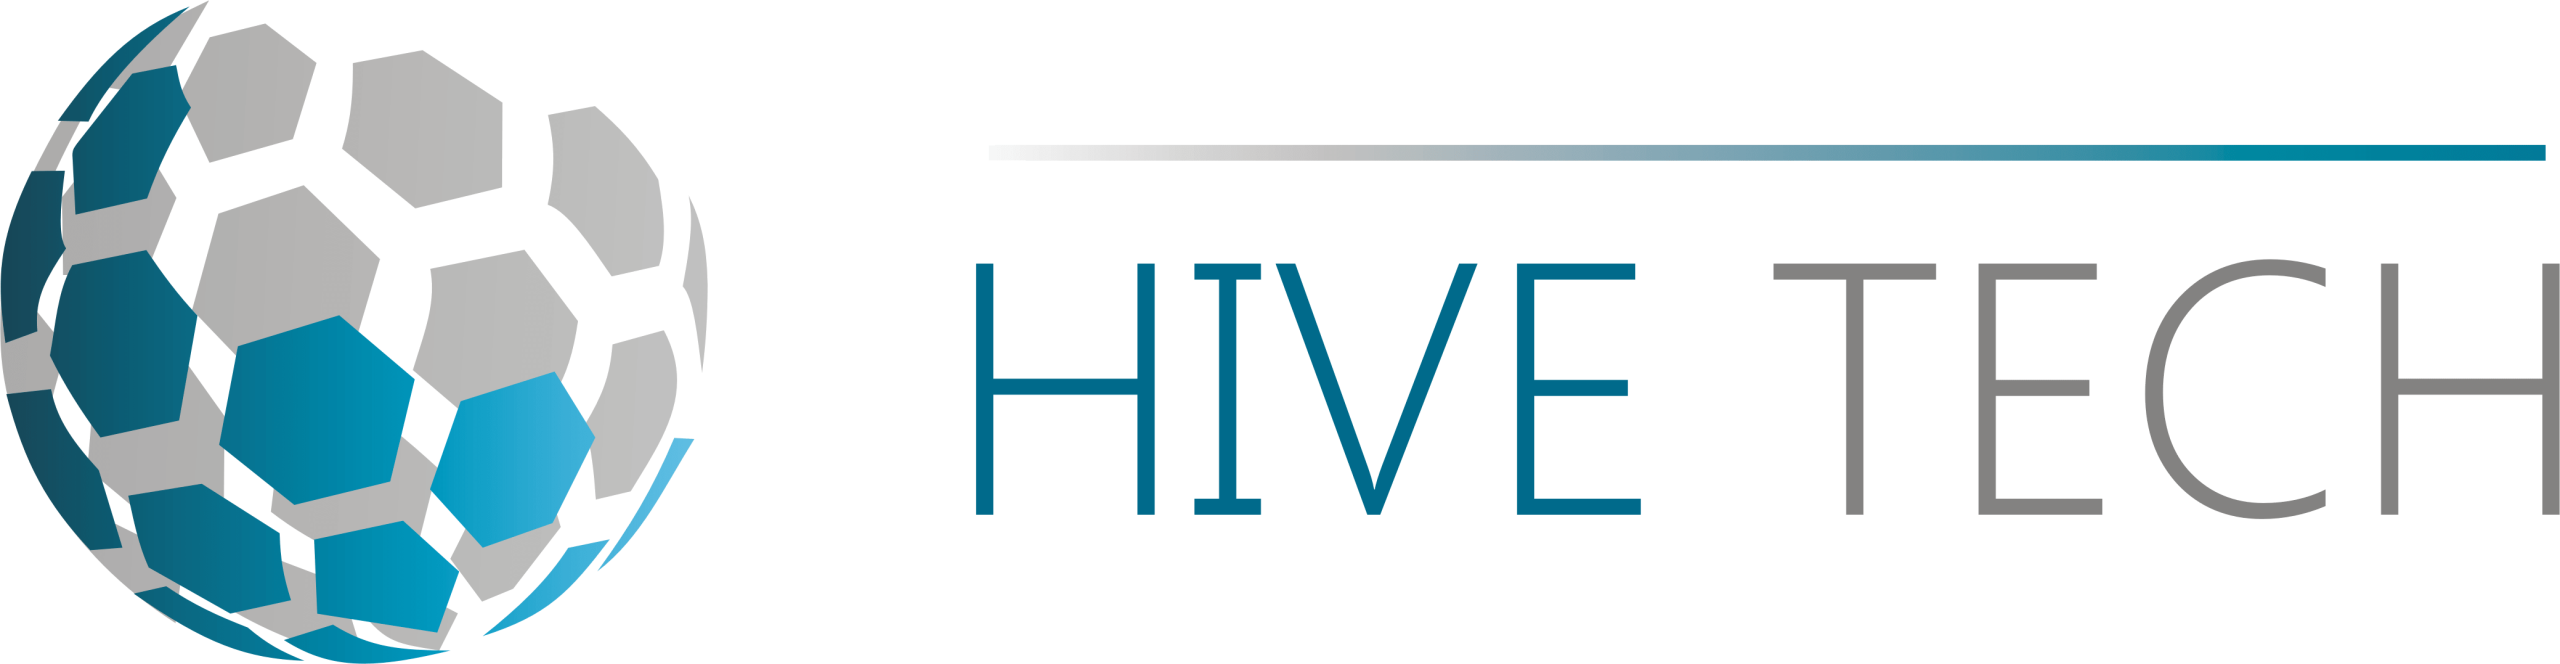 Hive Tech Global